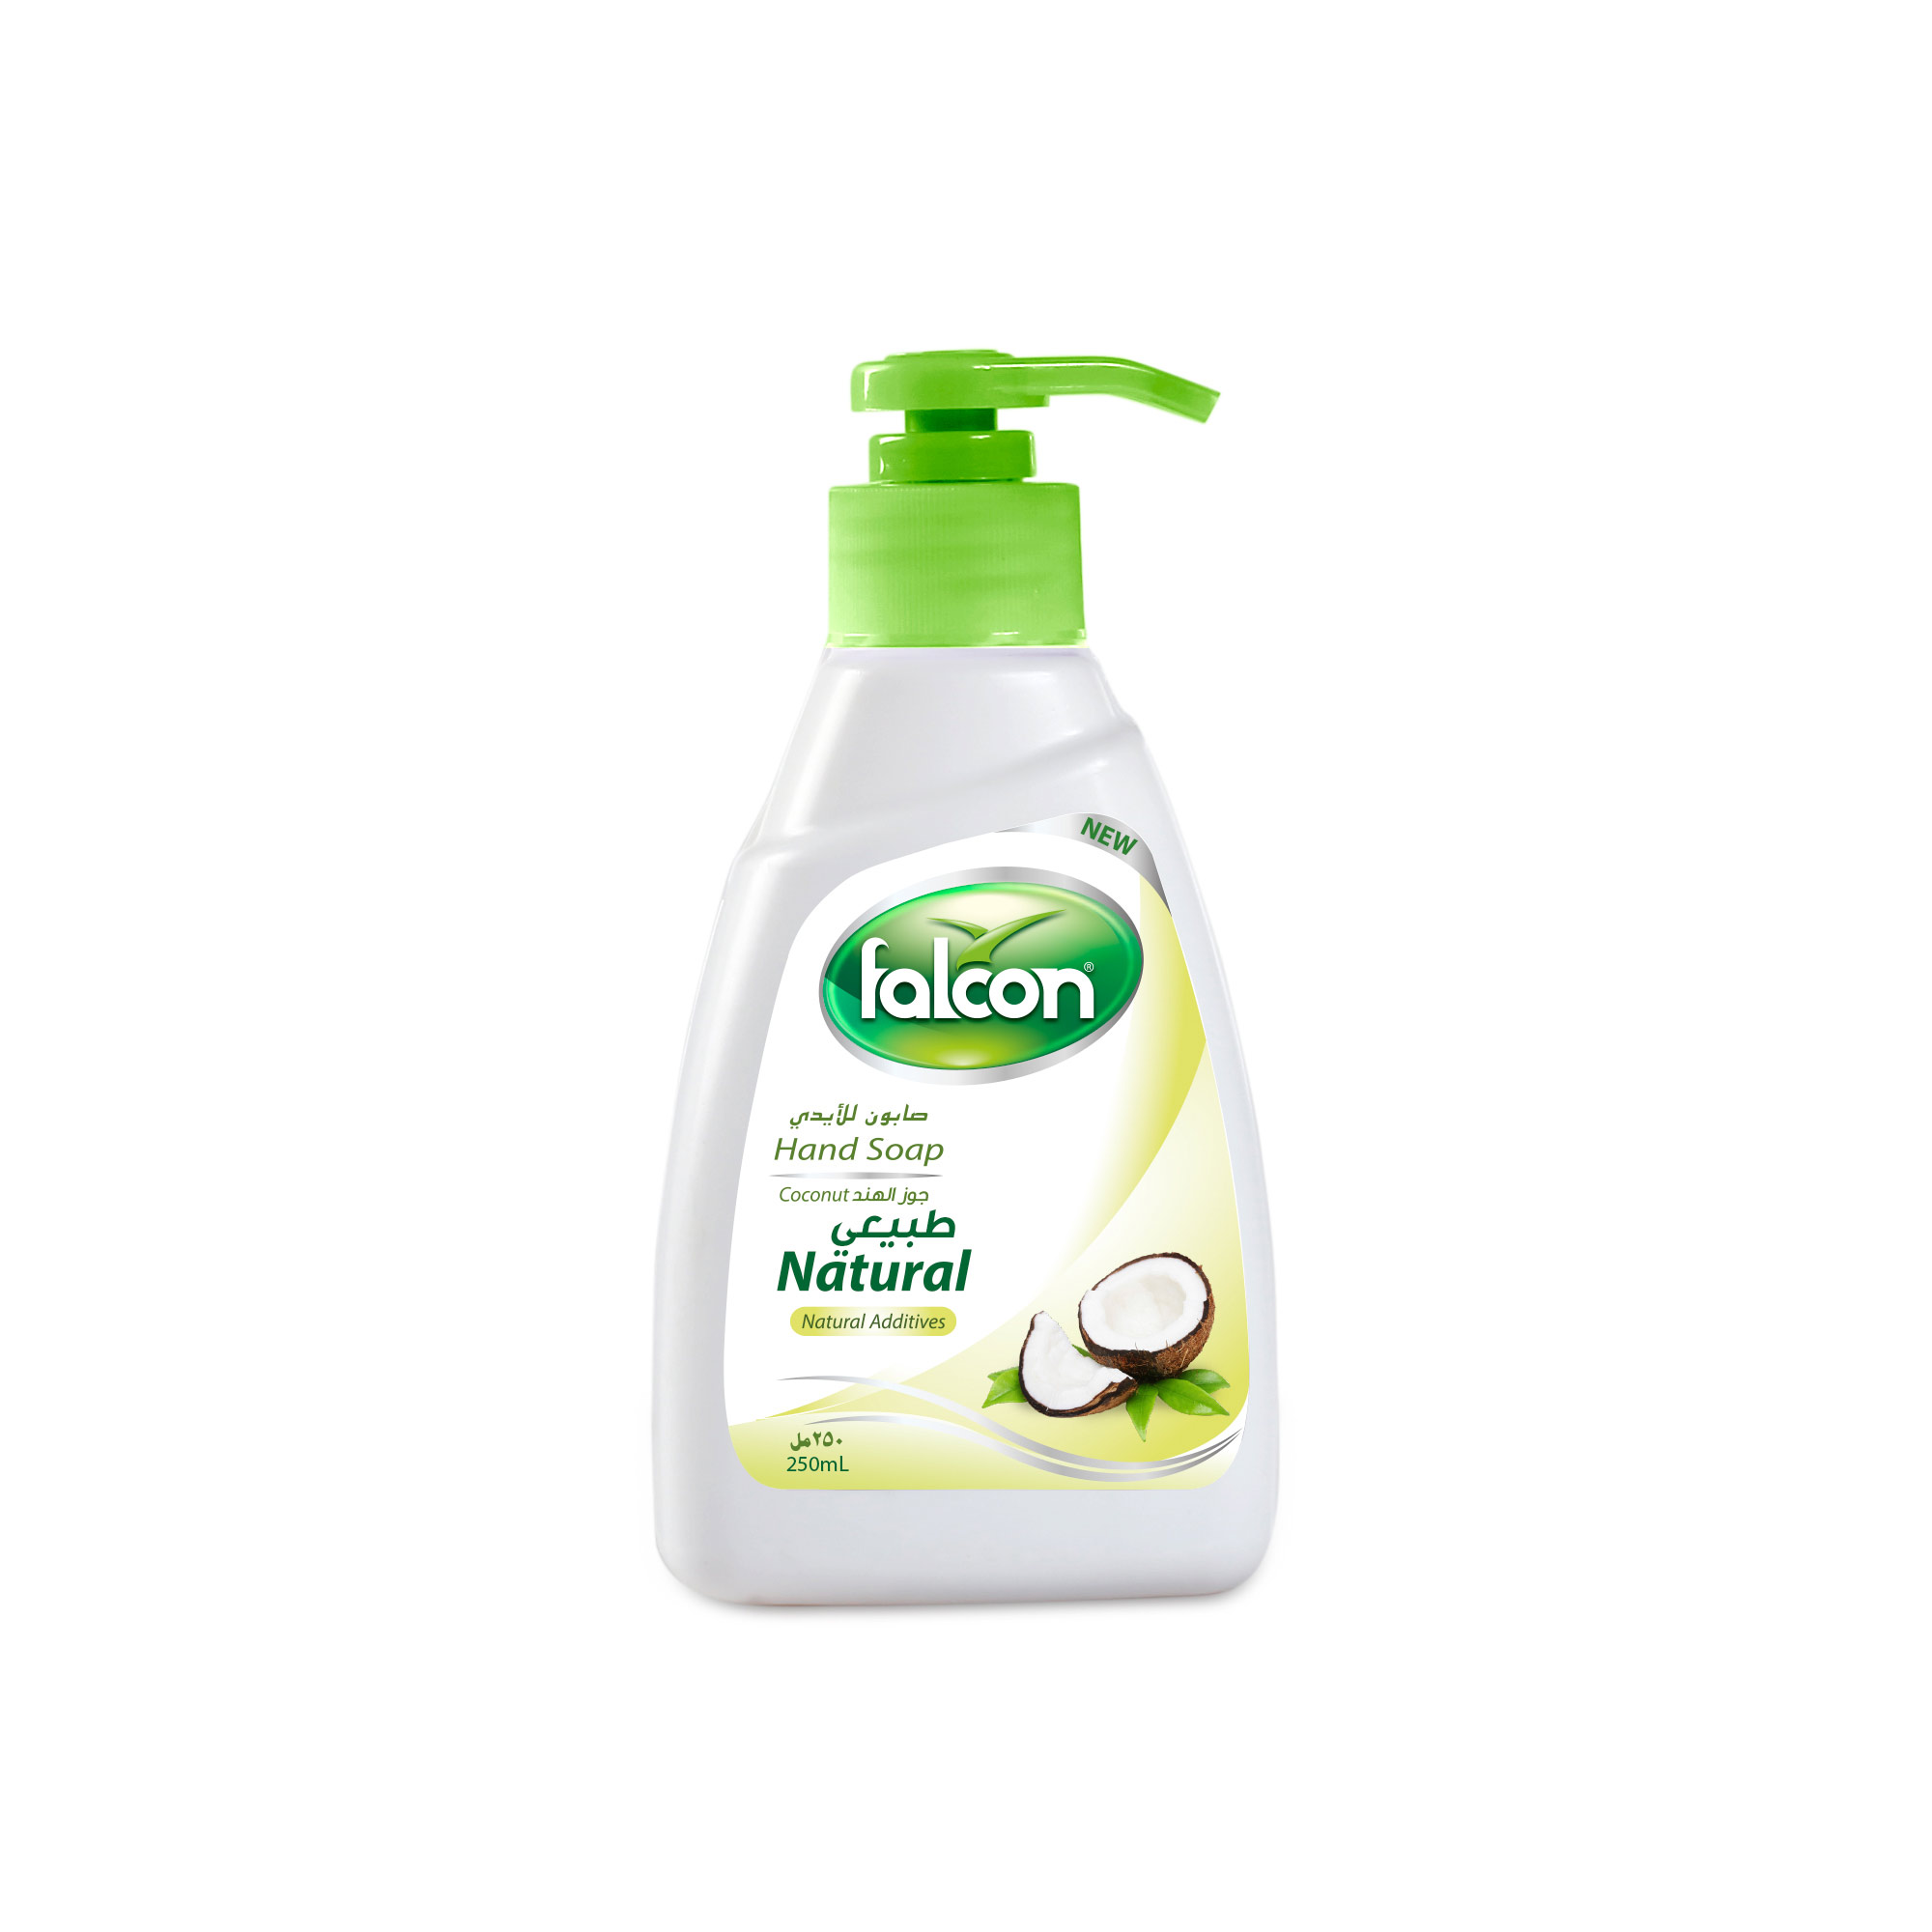 Falcon Natural Hand Soap Liquid (Coconut, 250 ml Bottle)